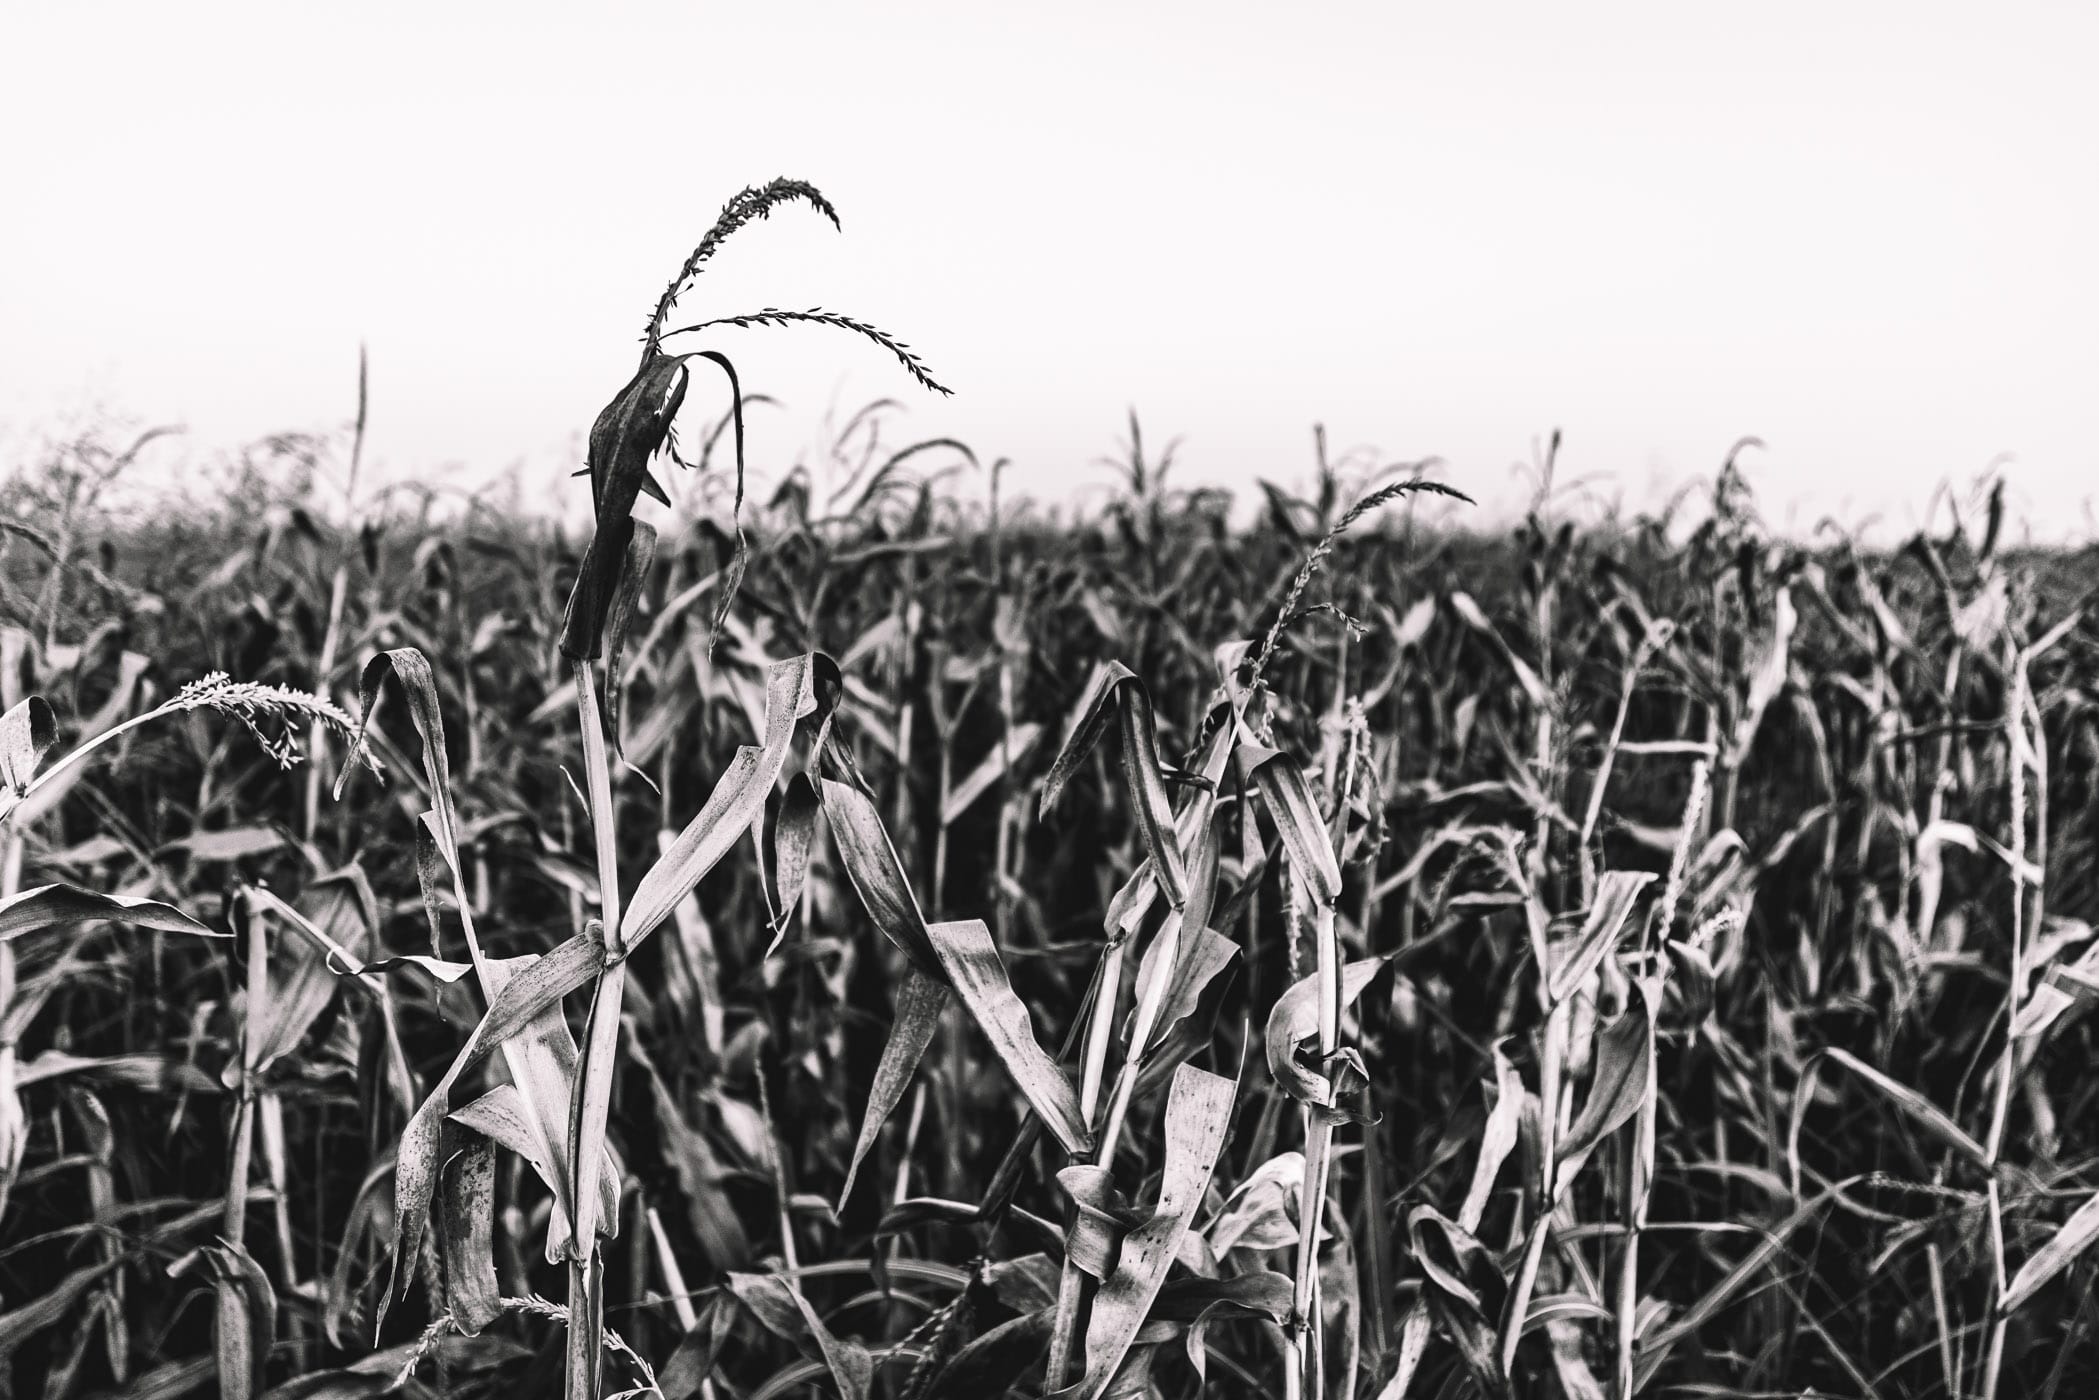 Desiccated cornstalks in a farm field near McKinney, Texas.